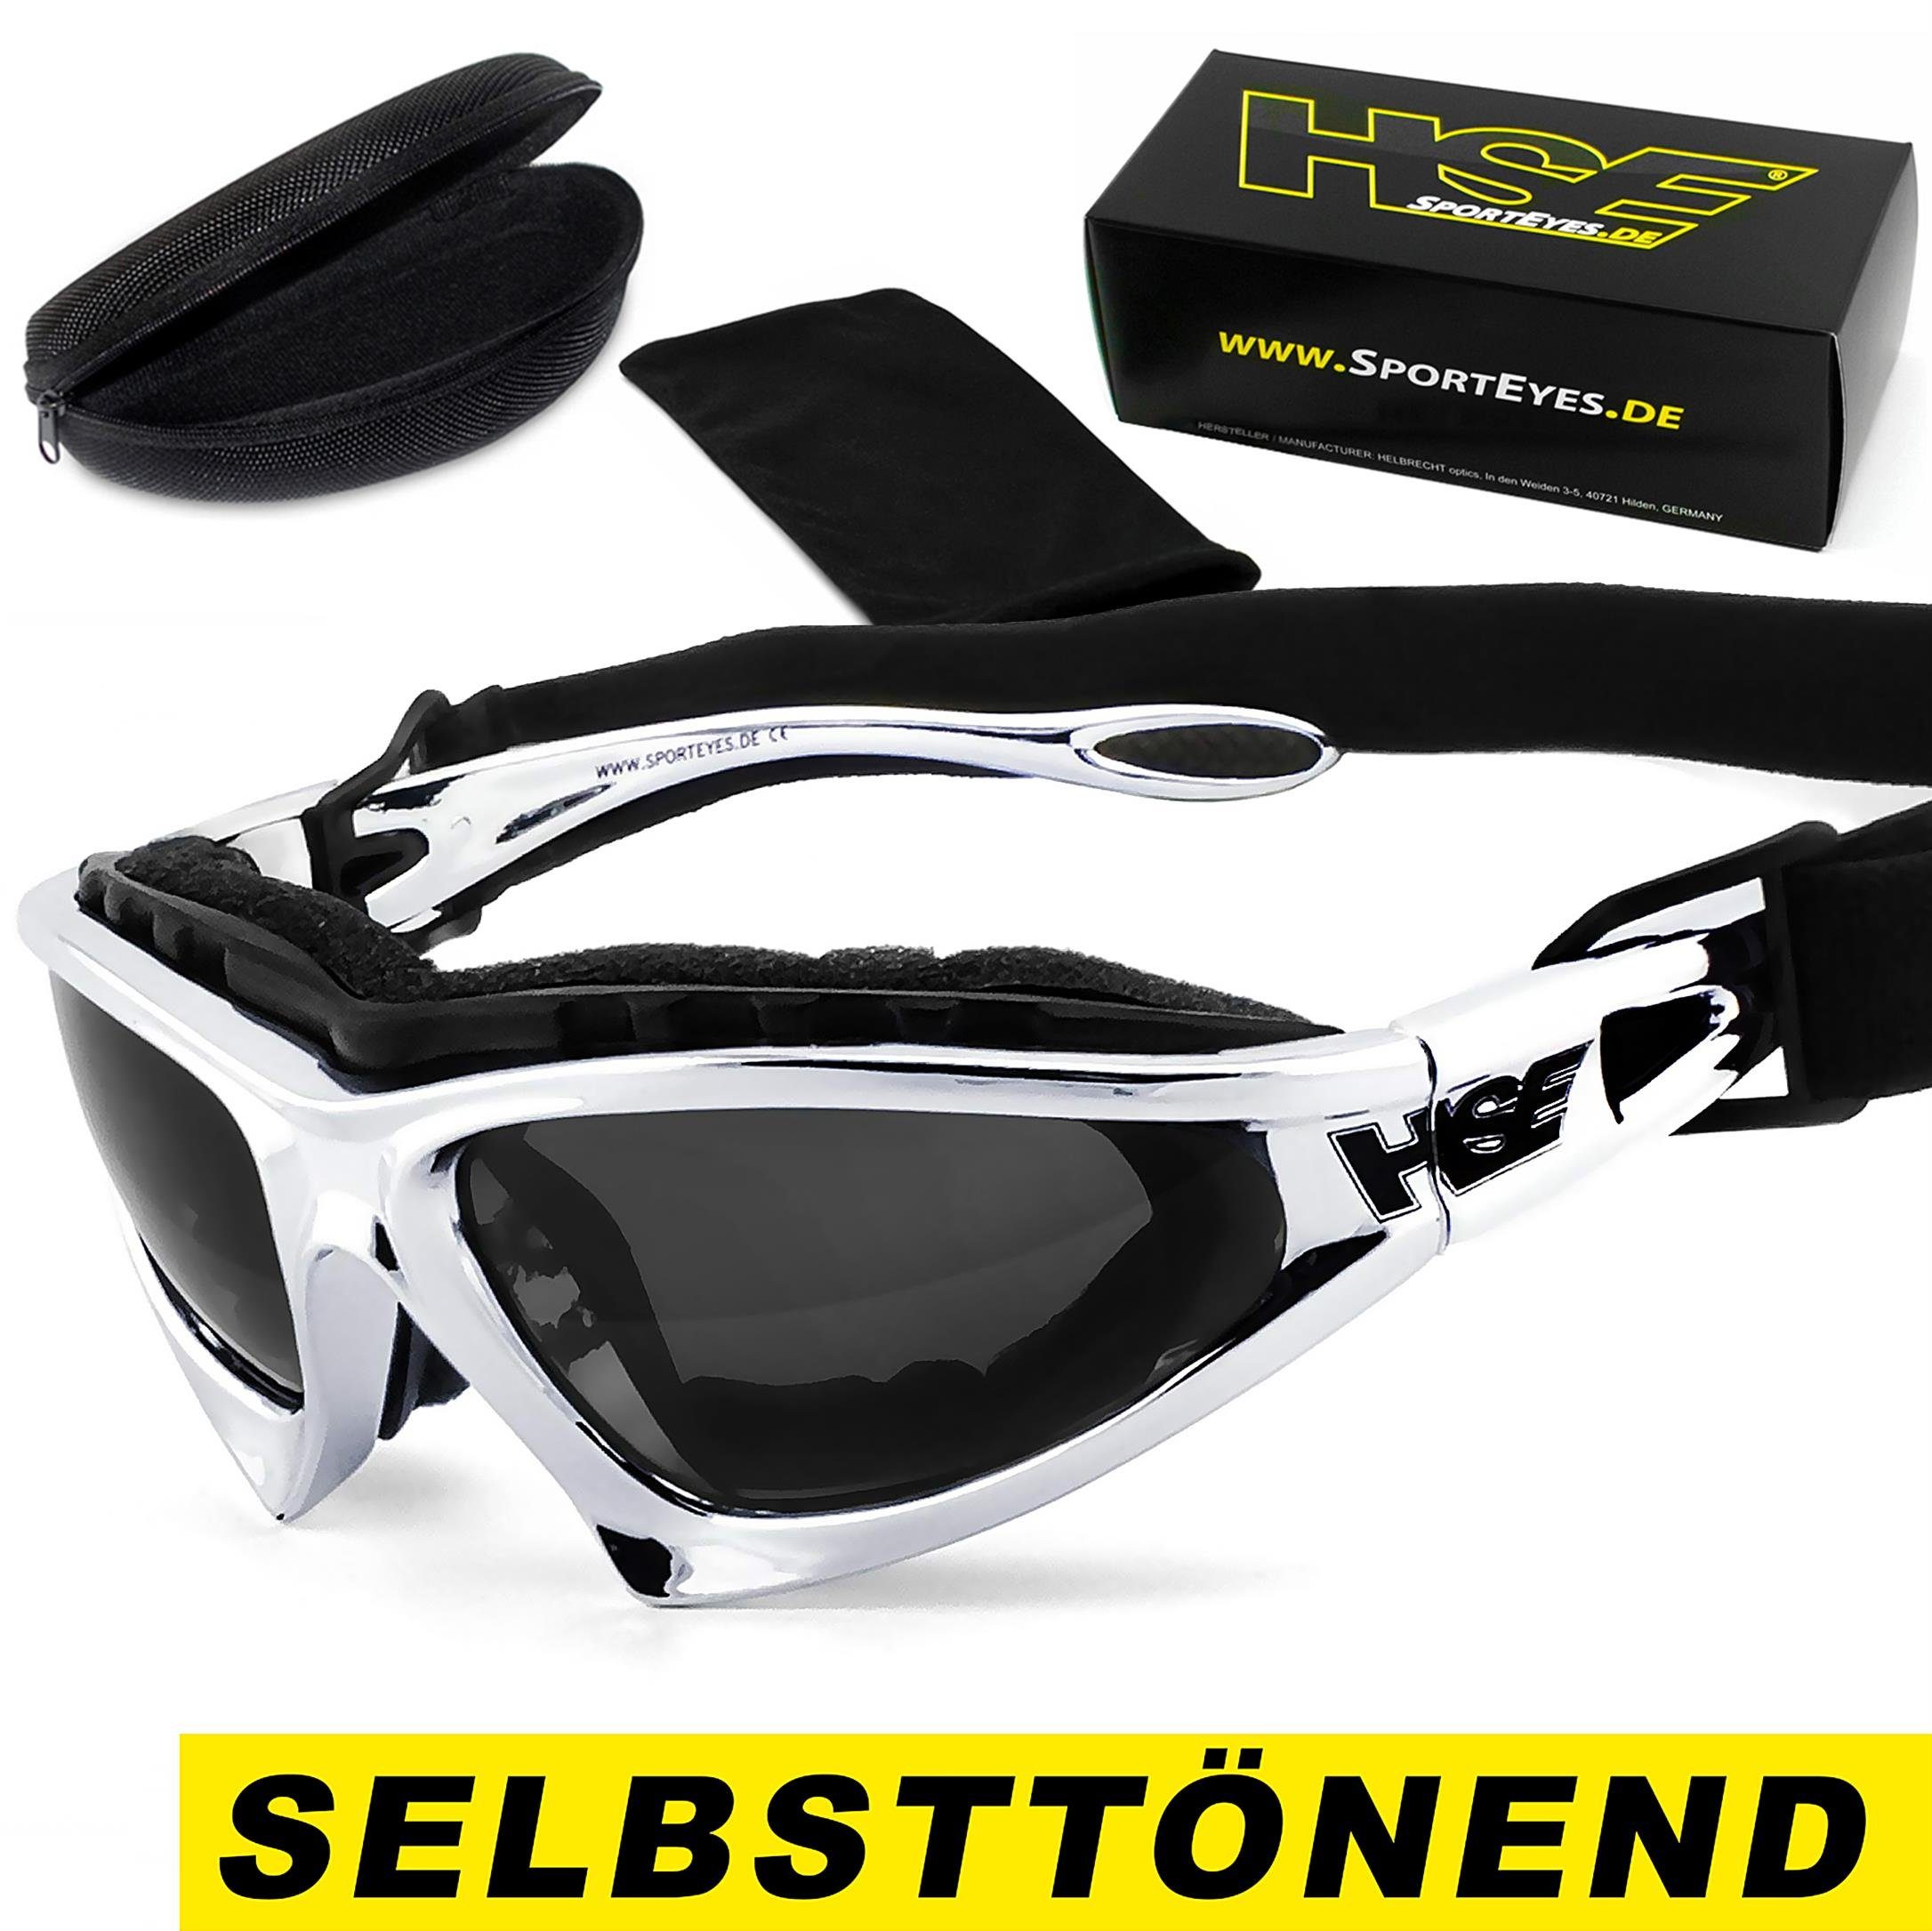 HSE - SportEyes Motorradbrille selbsttönende selbsttönend, schnell - FALCON-X Gläser